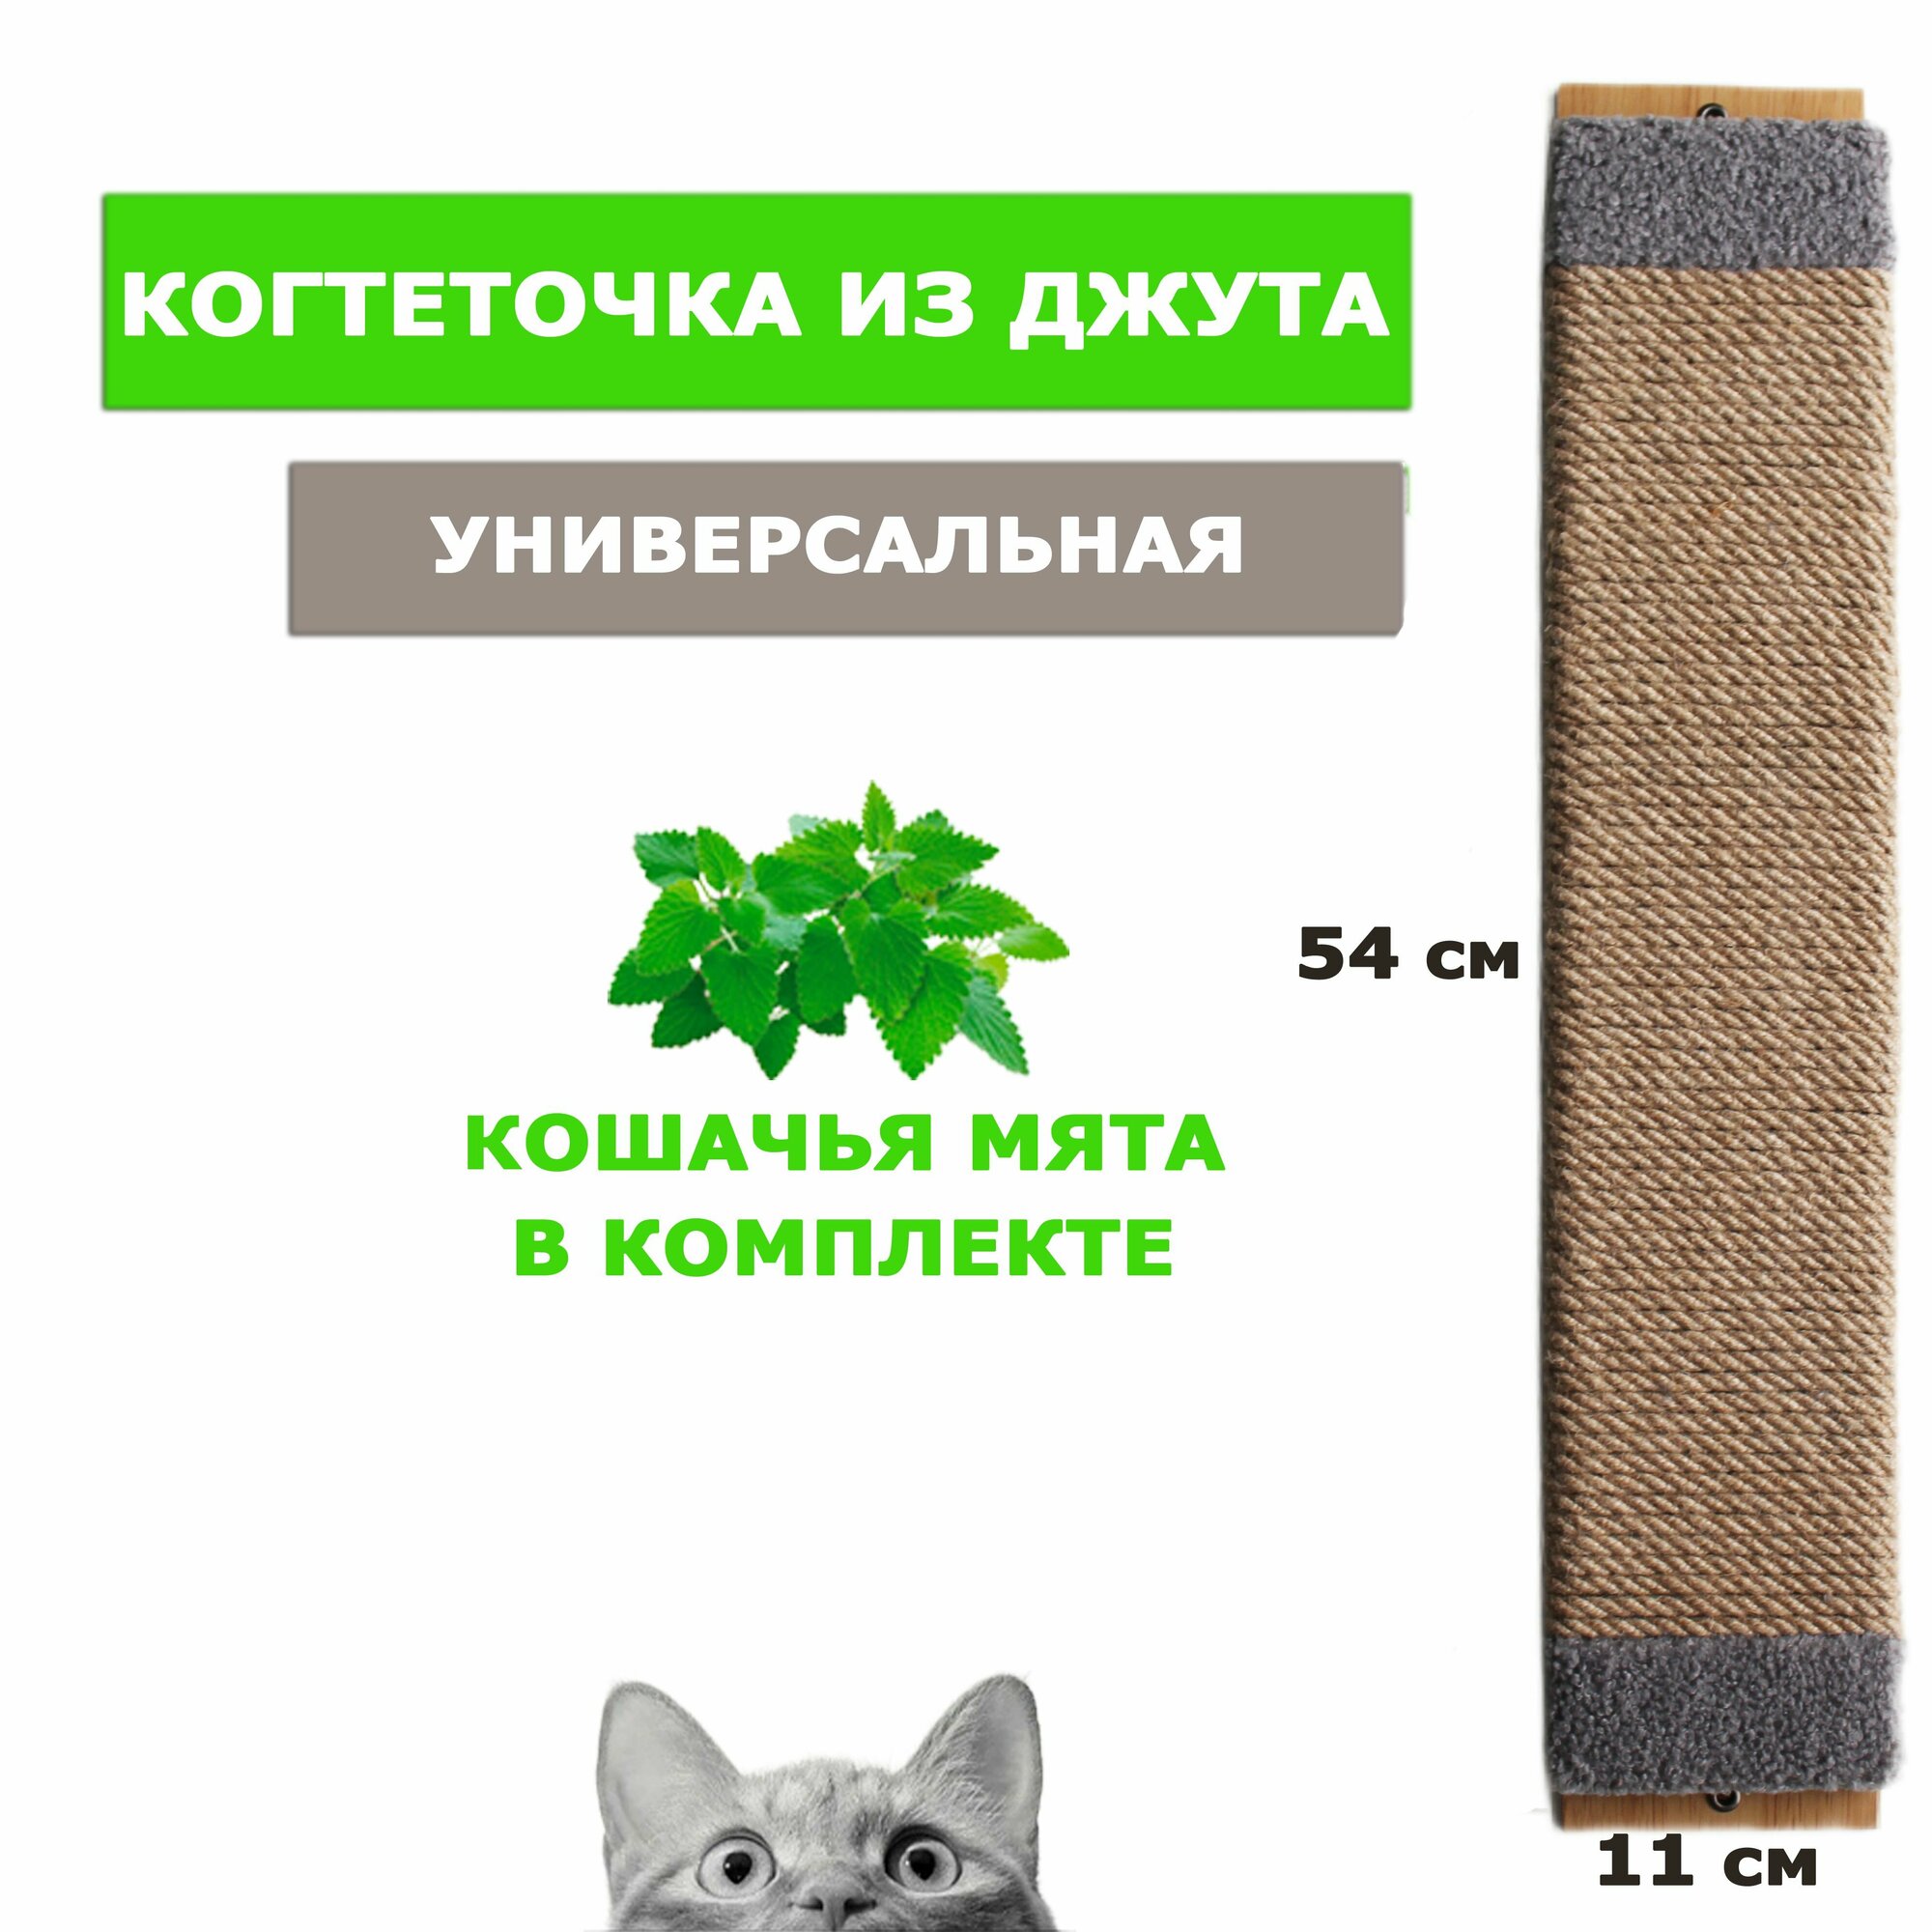 Когтеточка для кошек джутовая настенная 11х54 см, серый